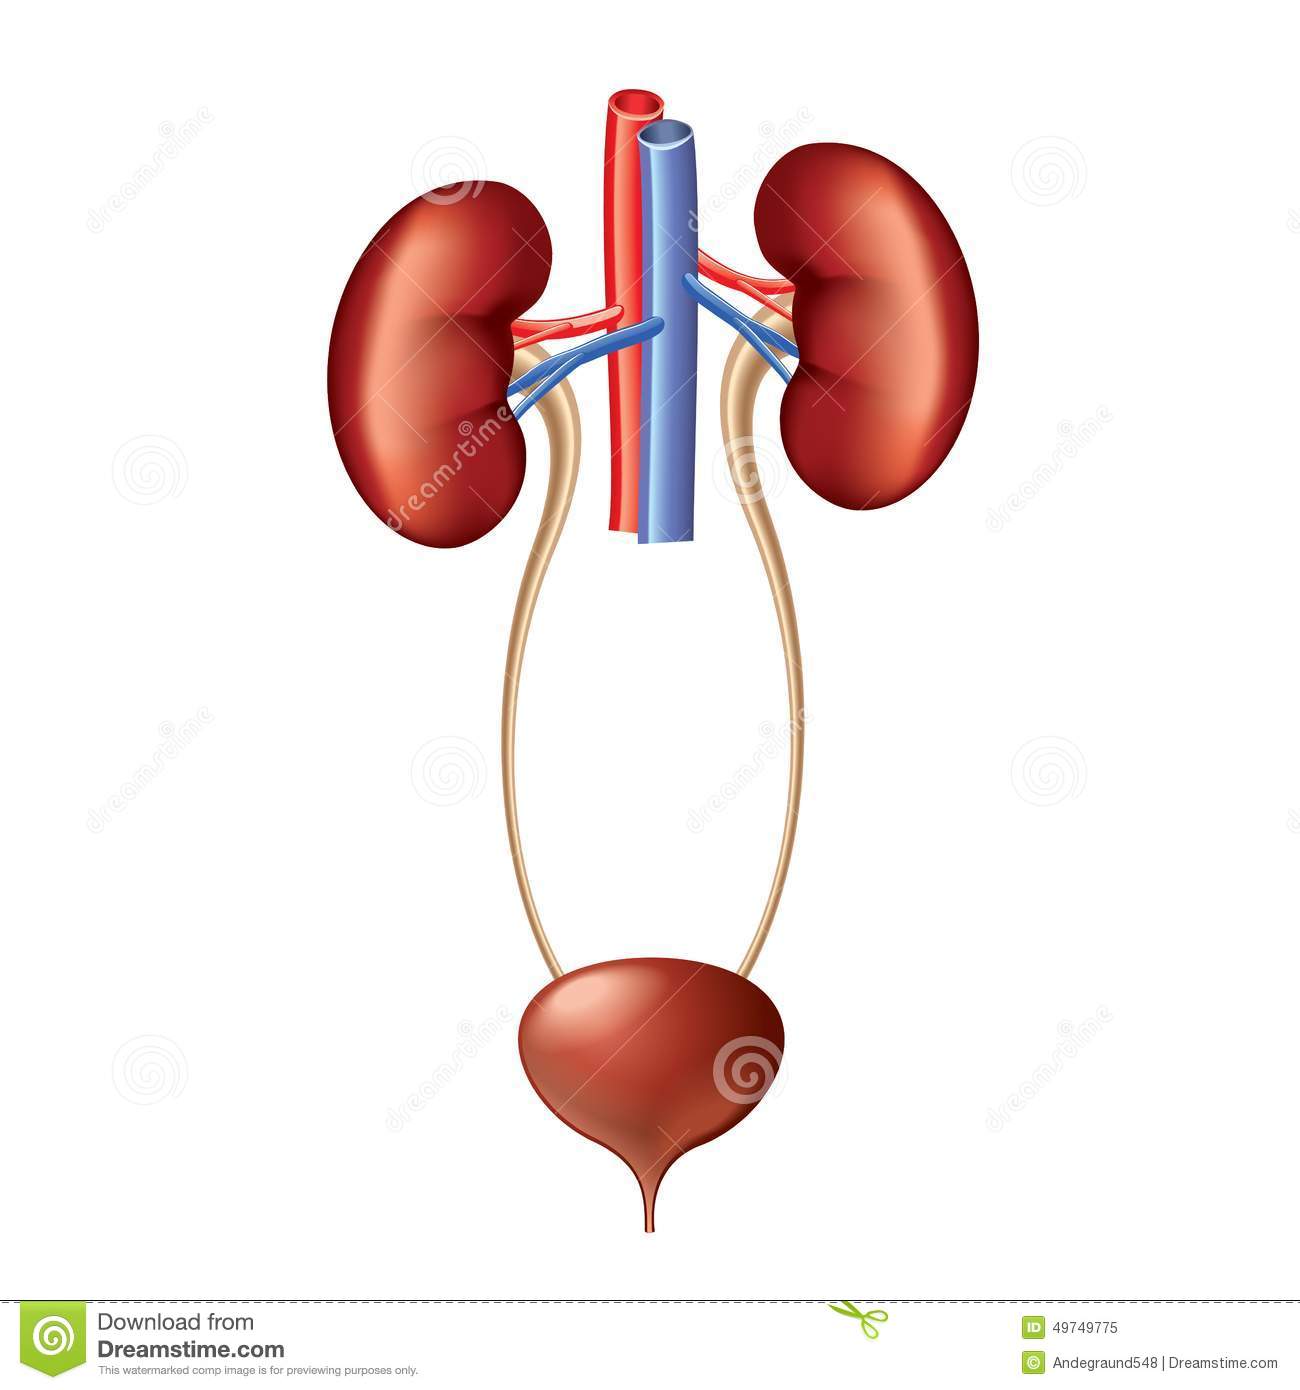 Urinary System Clipart Urinary System Anatomy